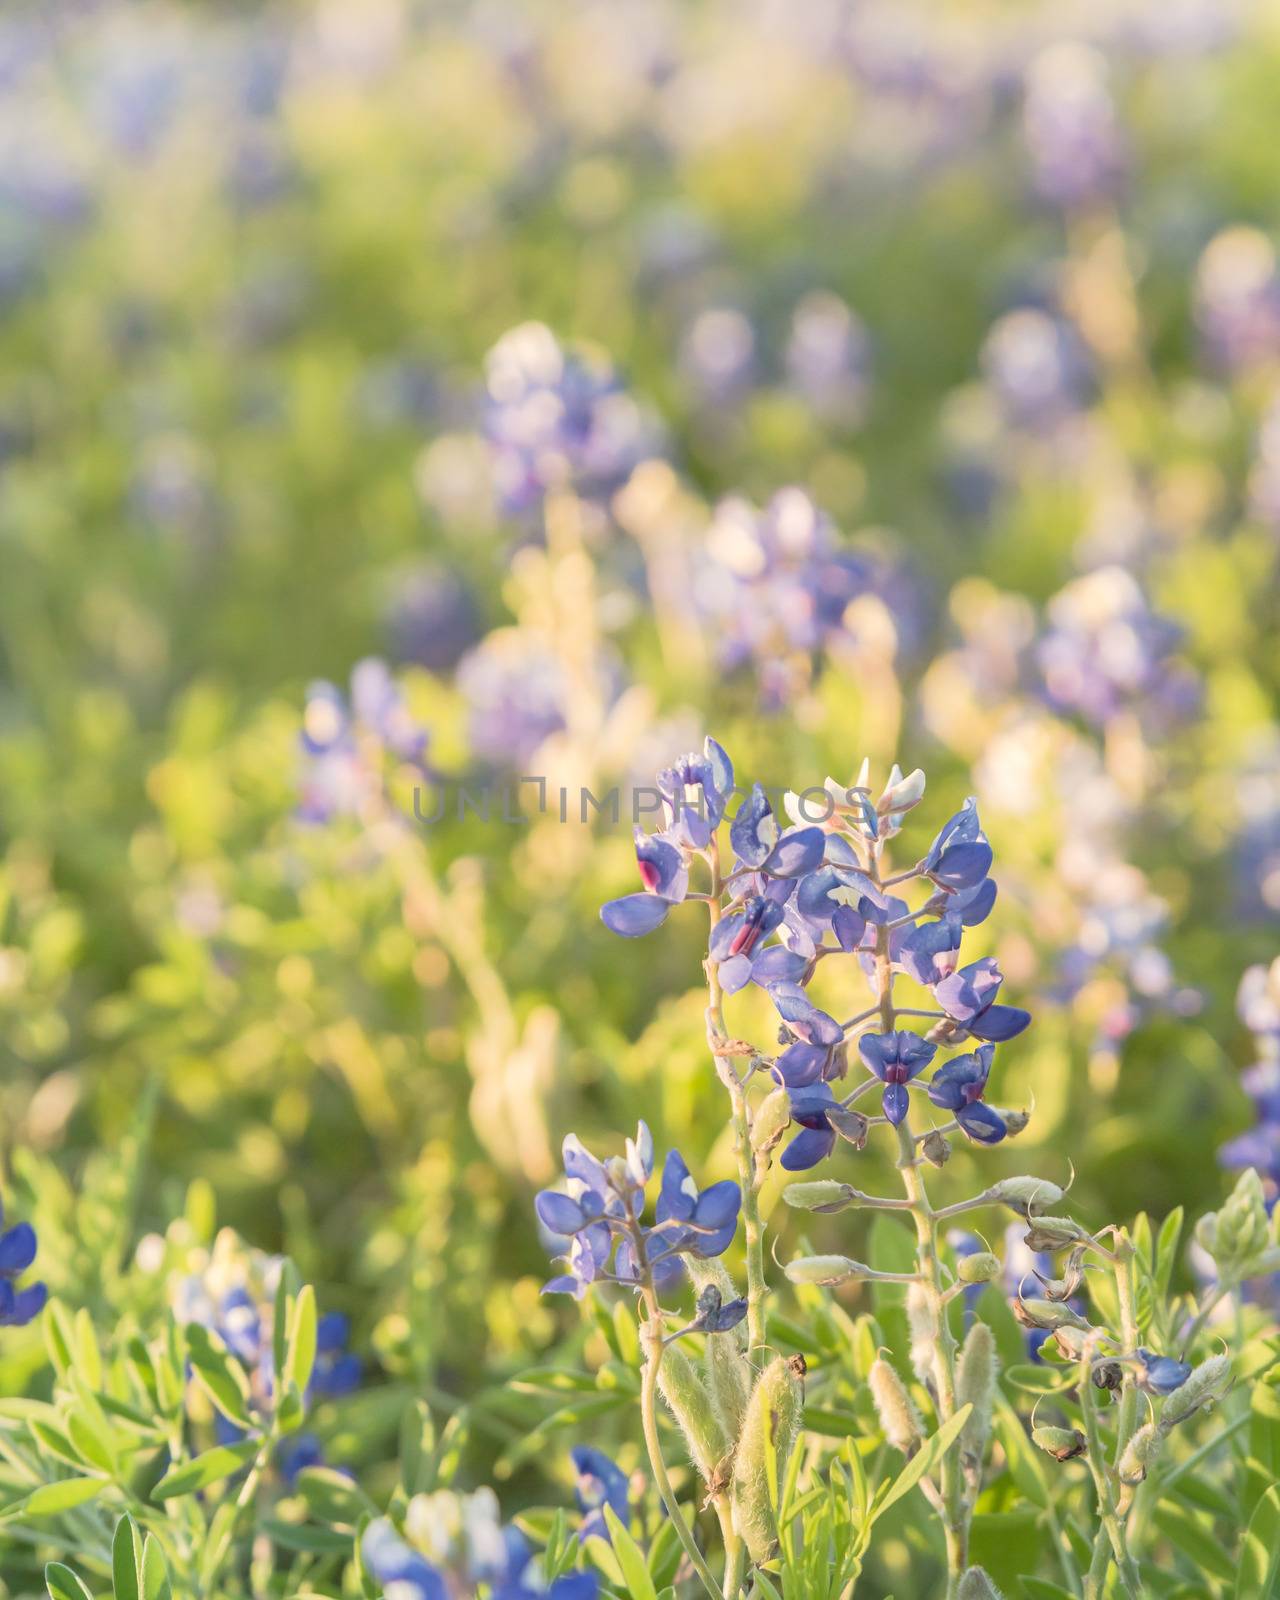 Blossom Bluebonnet wildflower at sunset in springtime near Dallas by trongnguyen